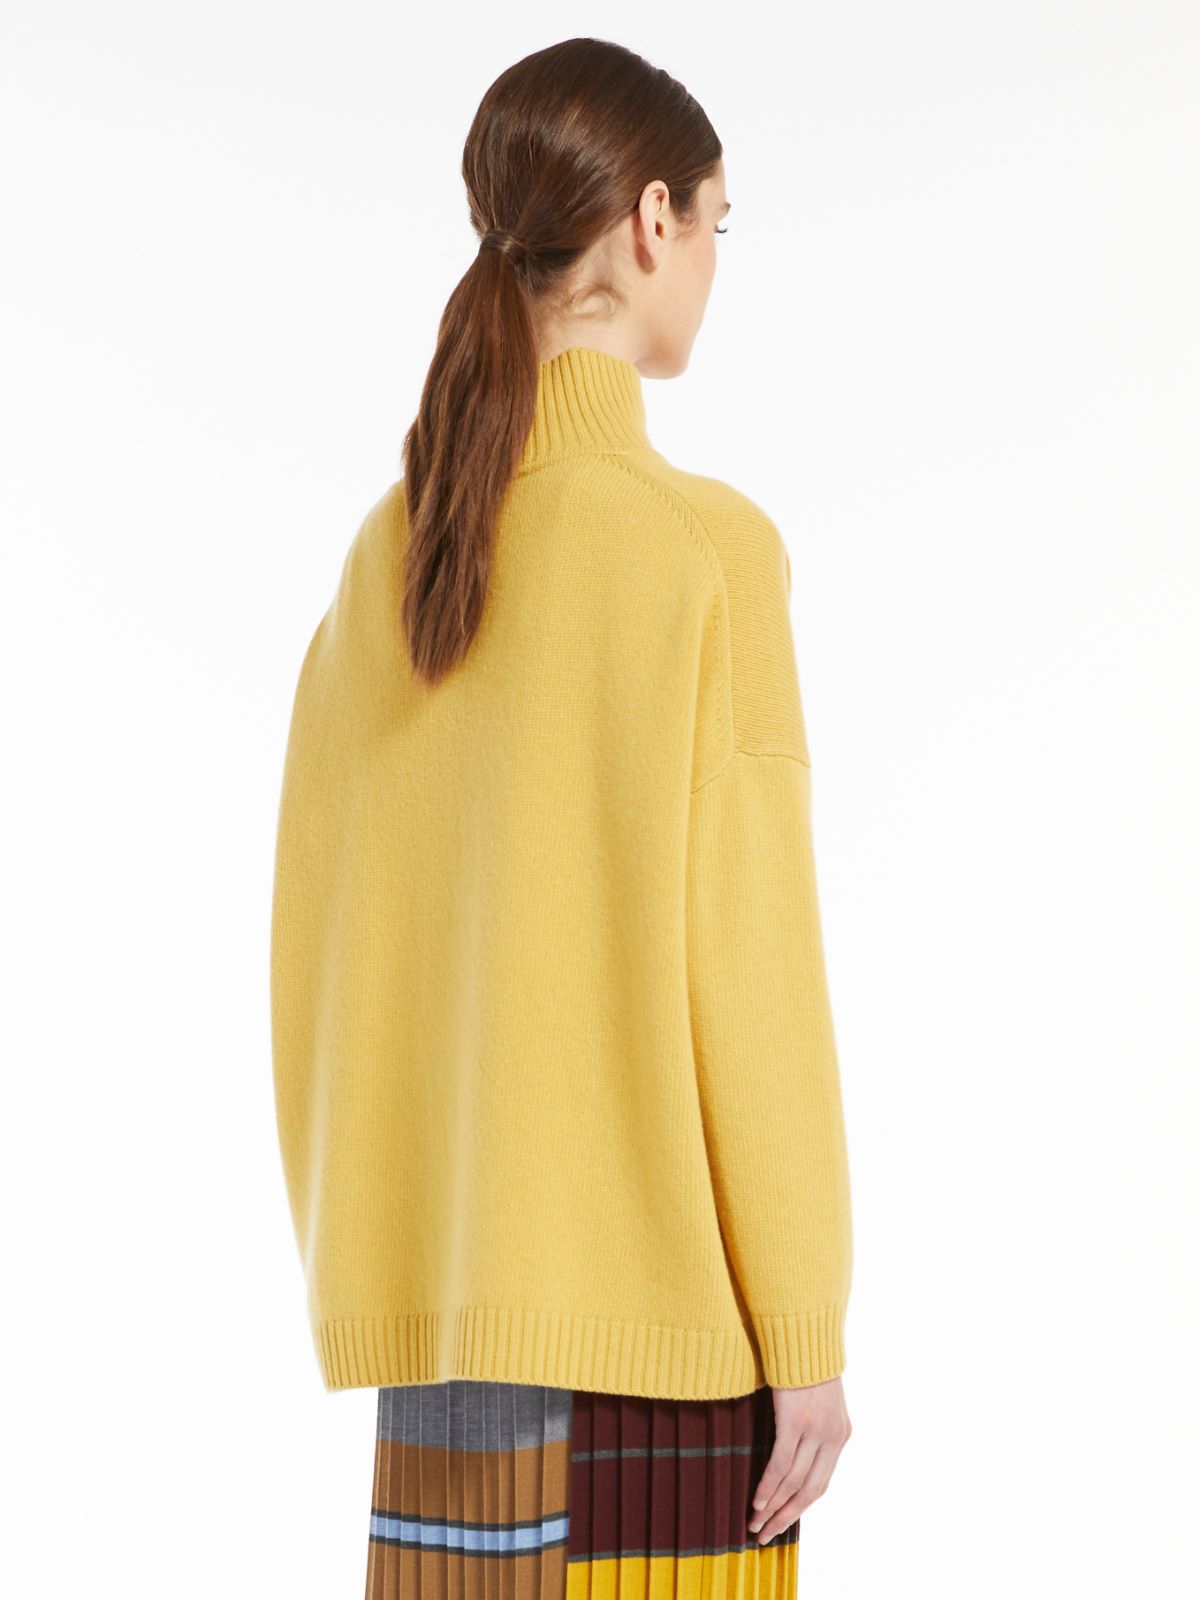 Carded wool sweater - YELLOW - Weekend Max Mara - 3